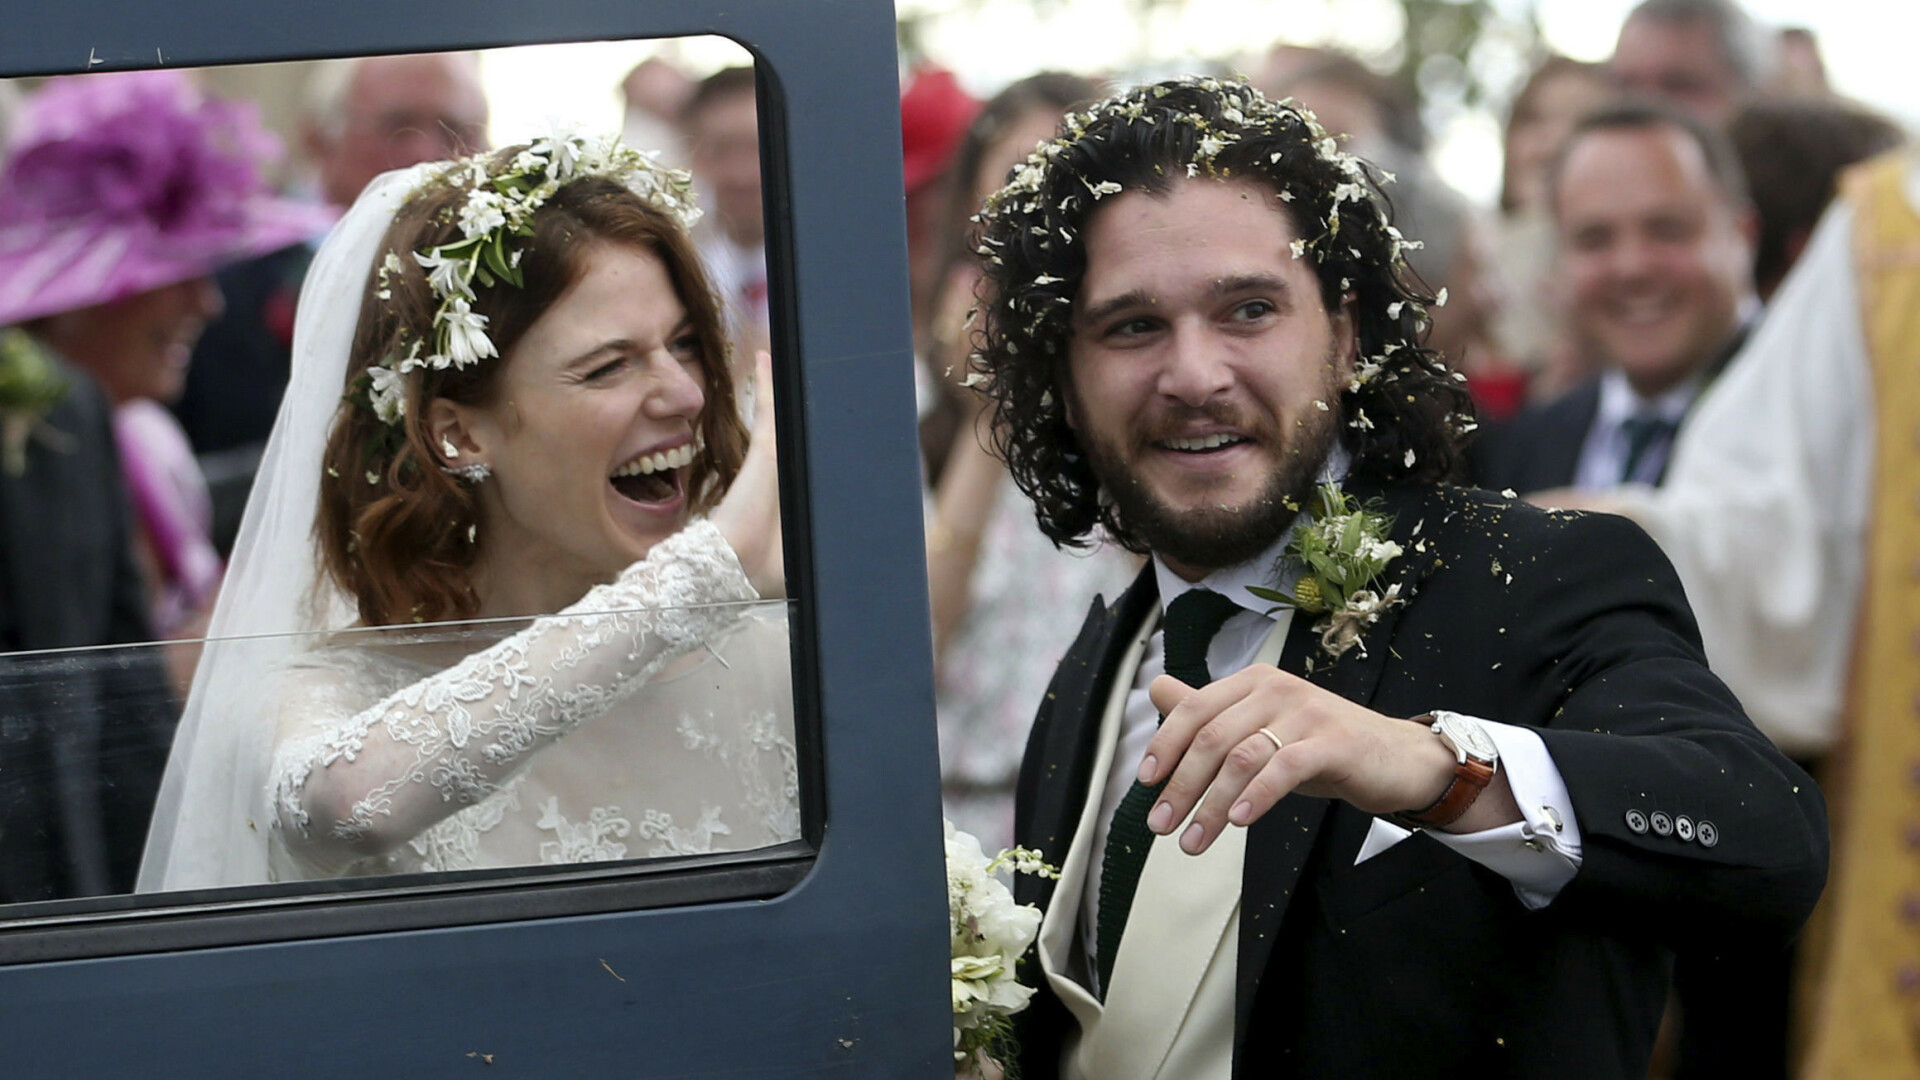 ”Jon Snow” și ”Ygritte” din Game of Thrones s-au căsătorit